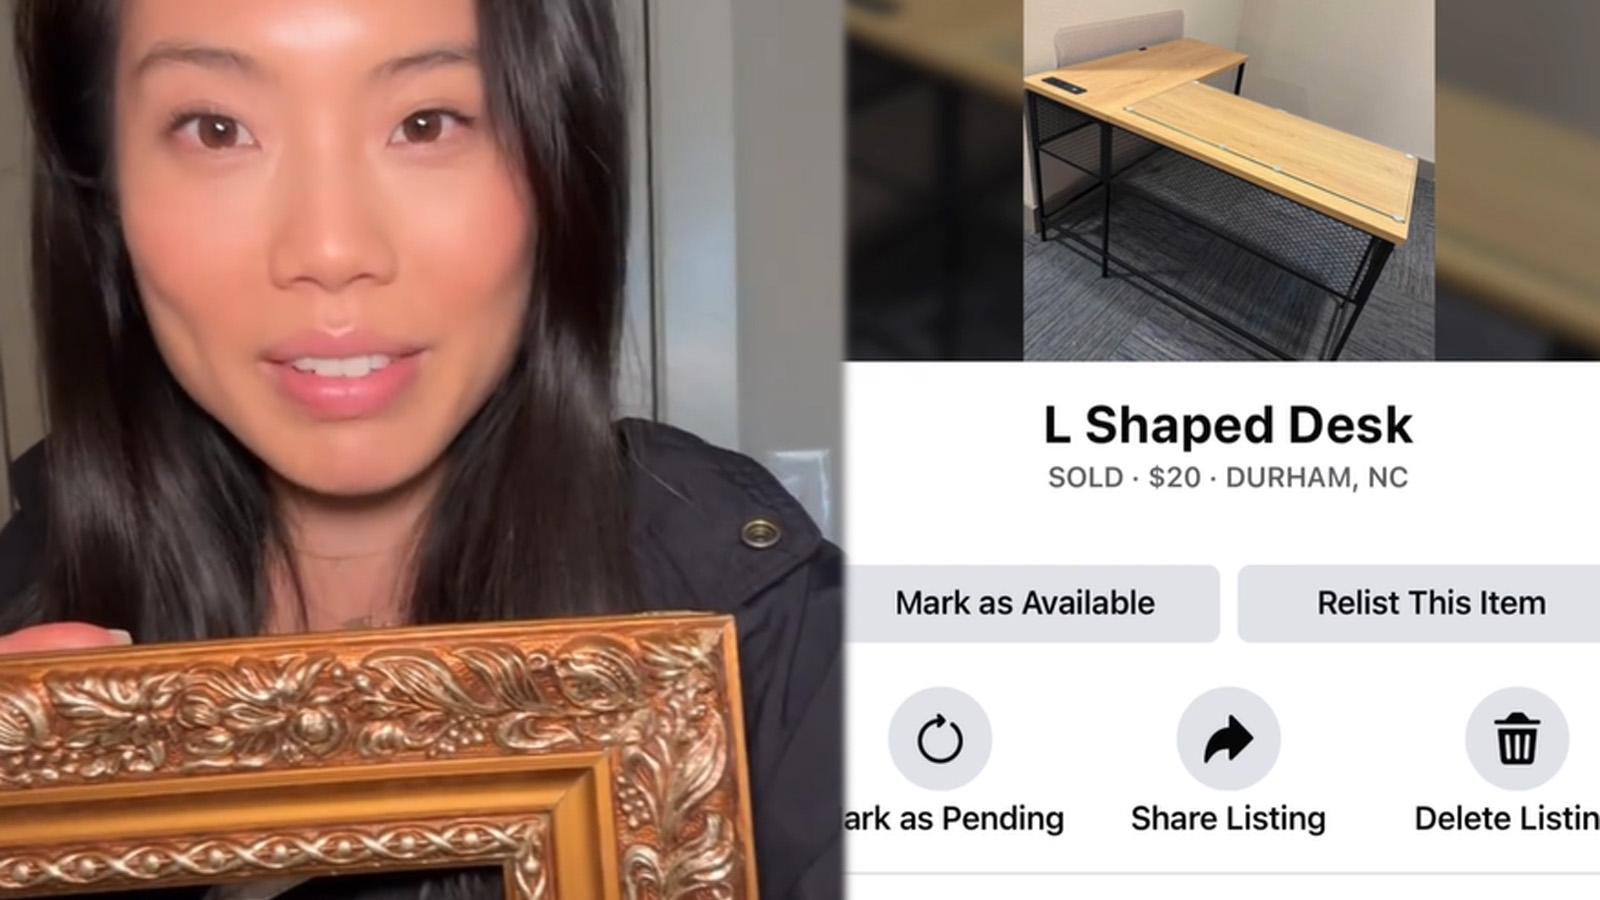 Woman sparks debate selling neighbor's furniture on Facebook Marketplace